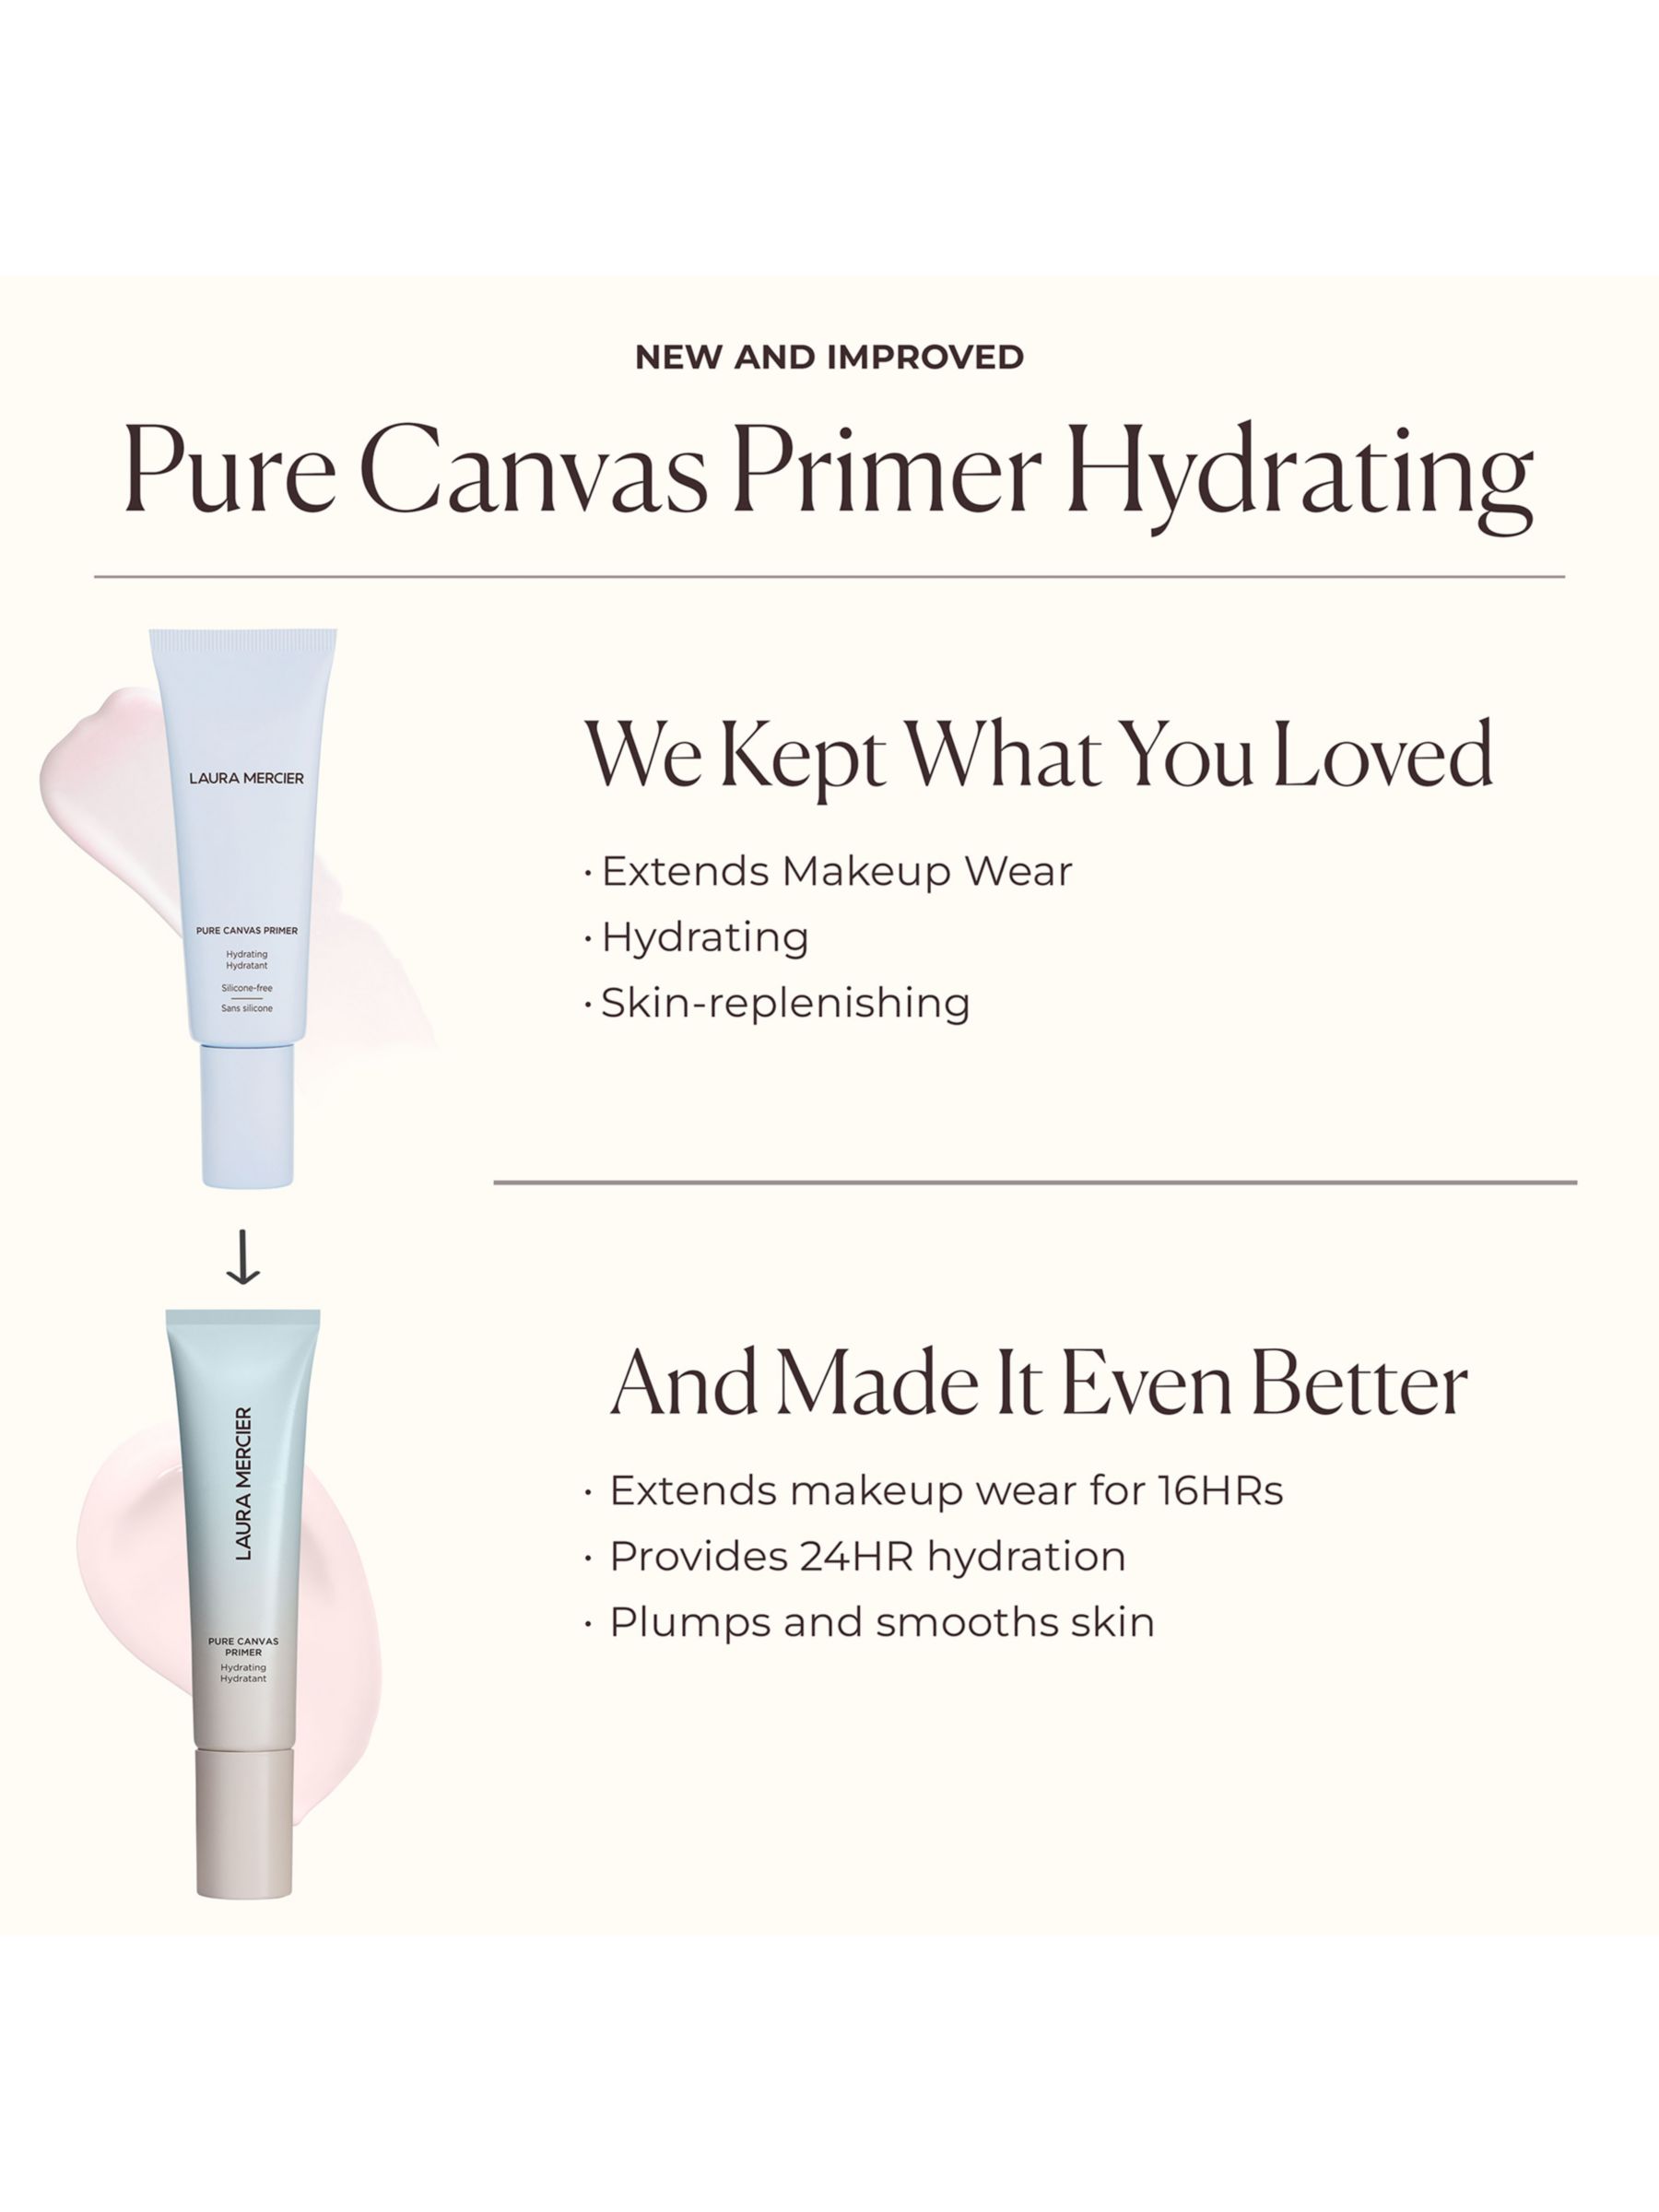 Laura Mercier Pure Canvas Primer Hydrating, 30ml 9